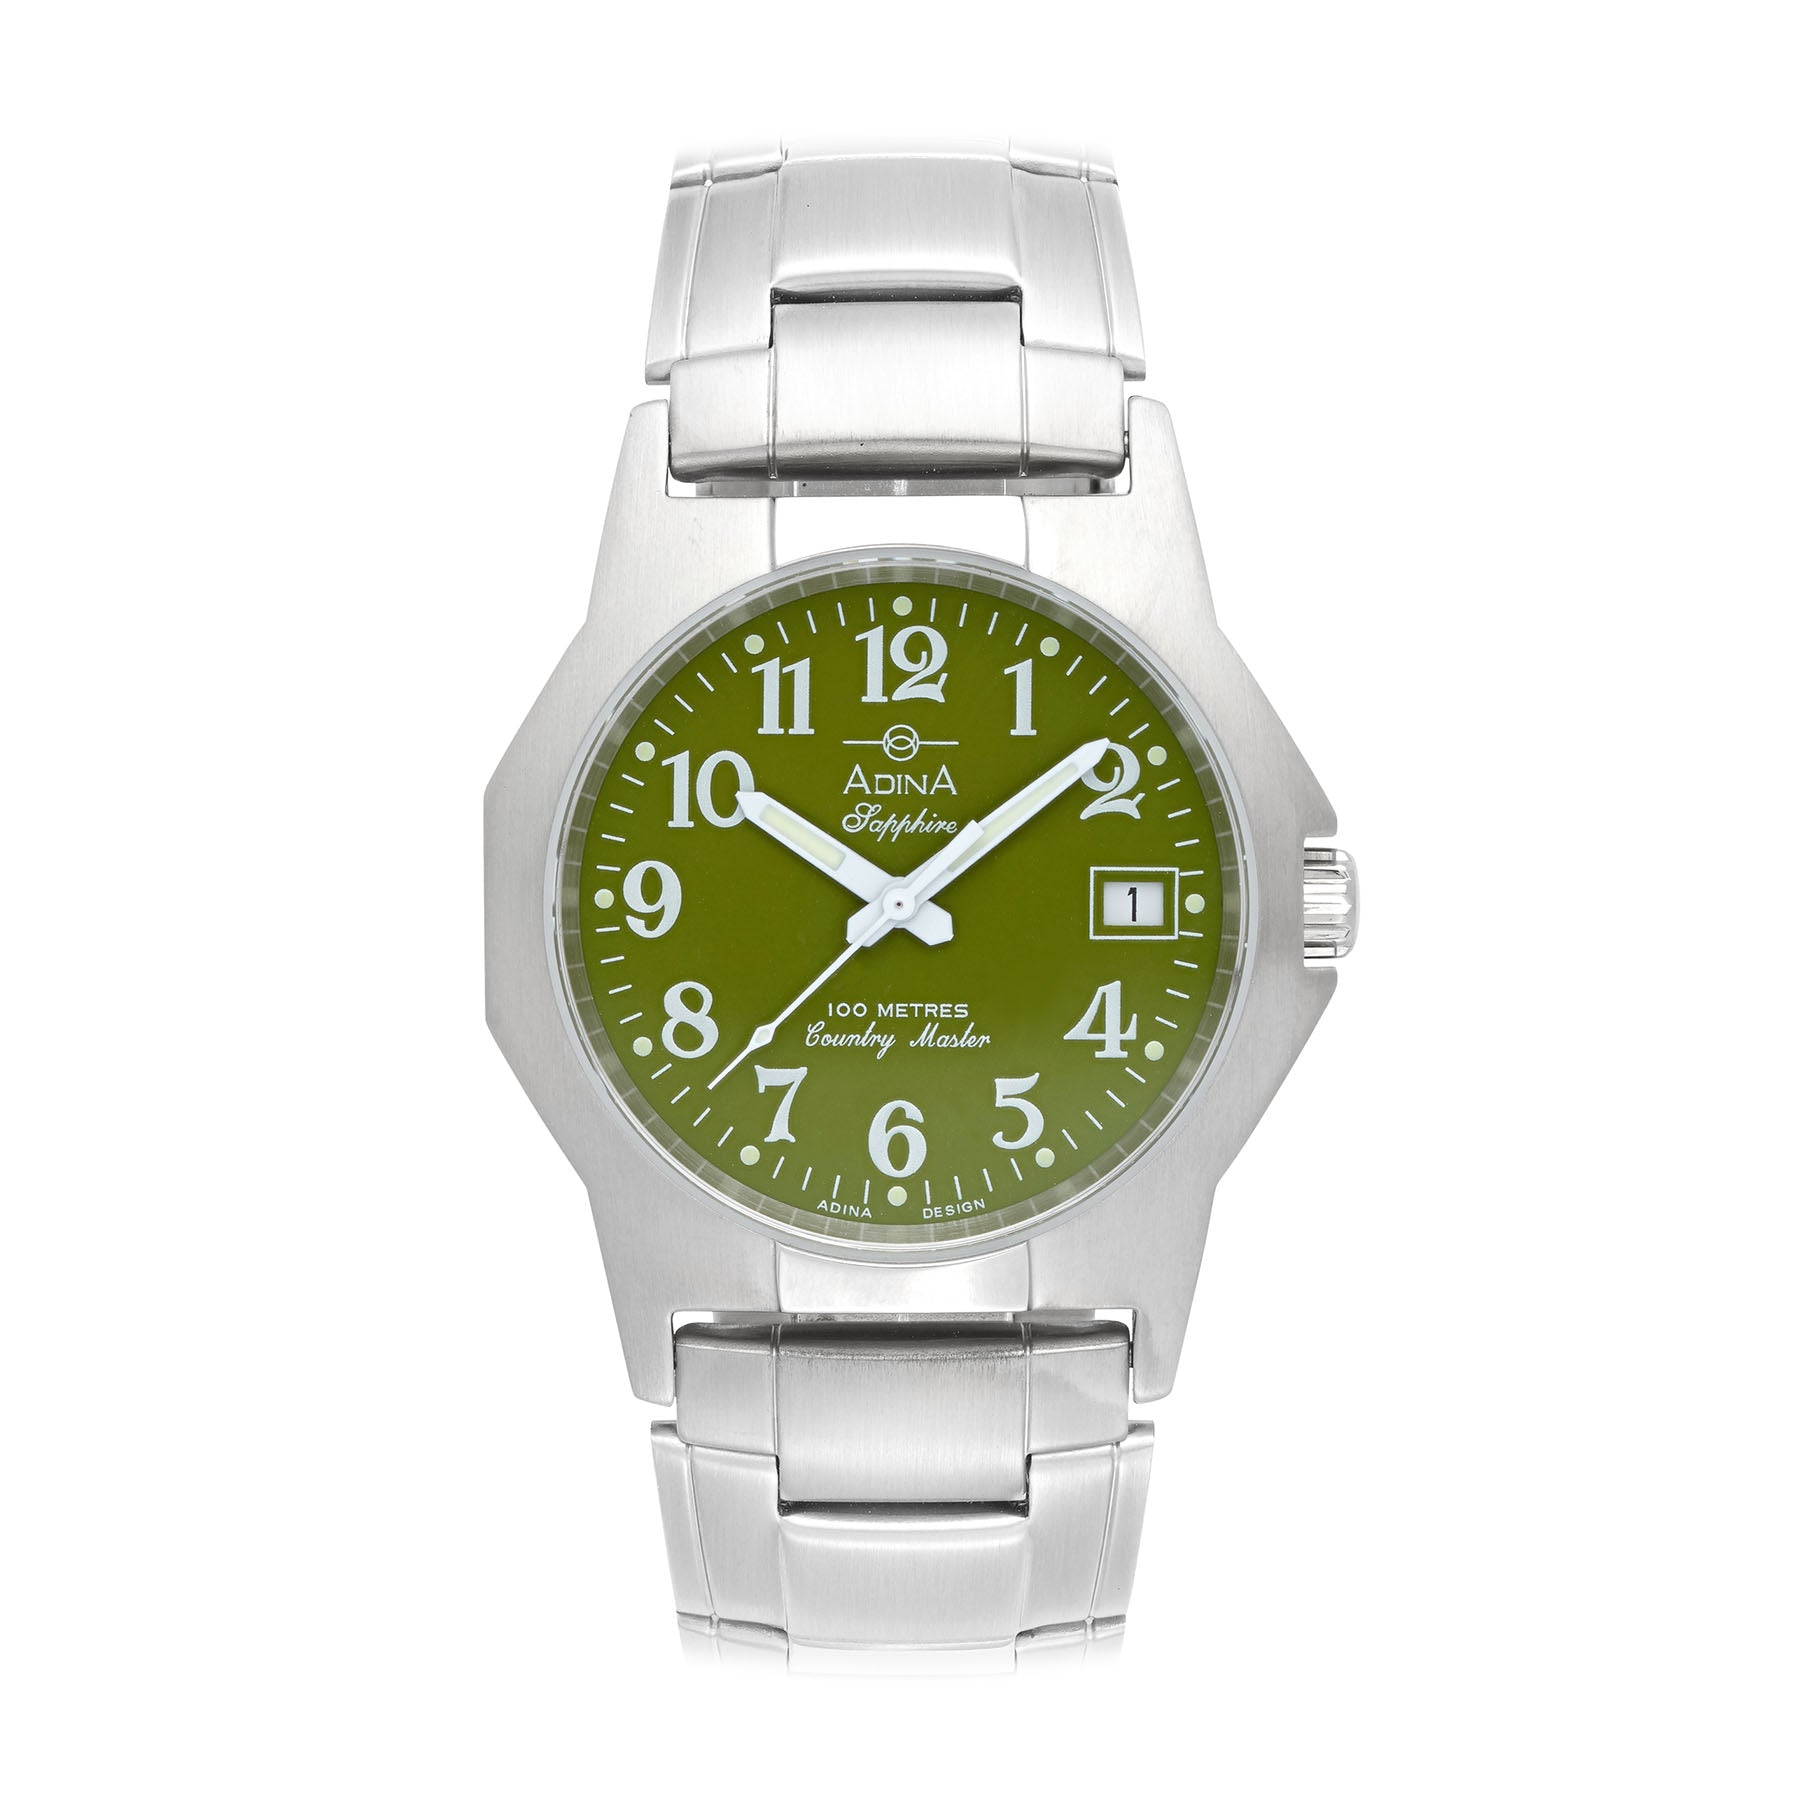 ADINA Countrymaster Work Watch Limited Edition Green